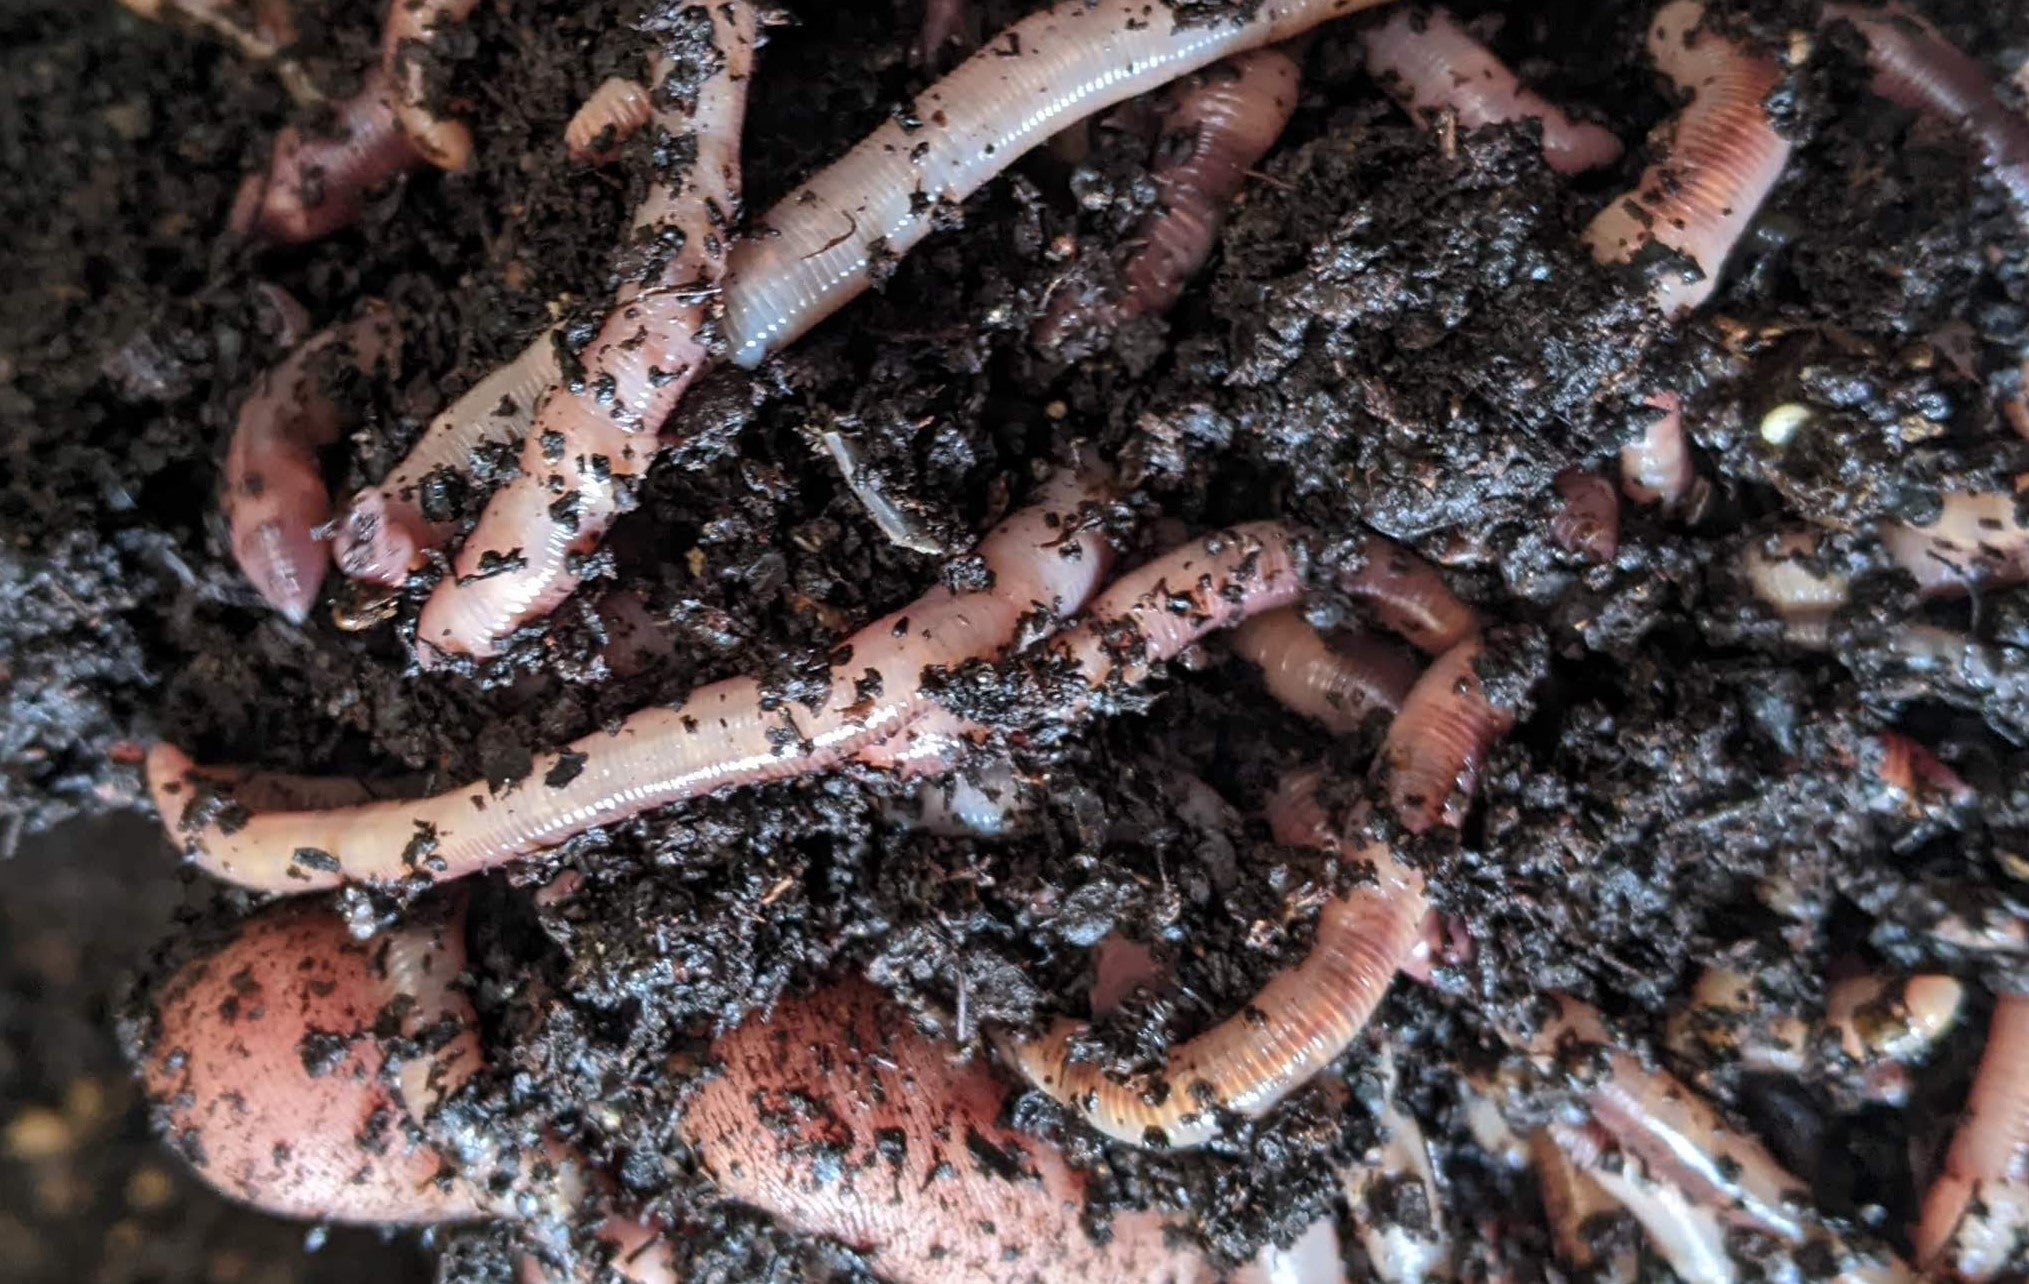 Live European Nightcrawler Worms for Sale